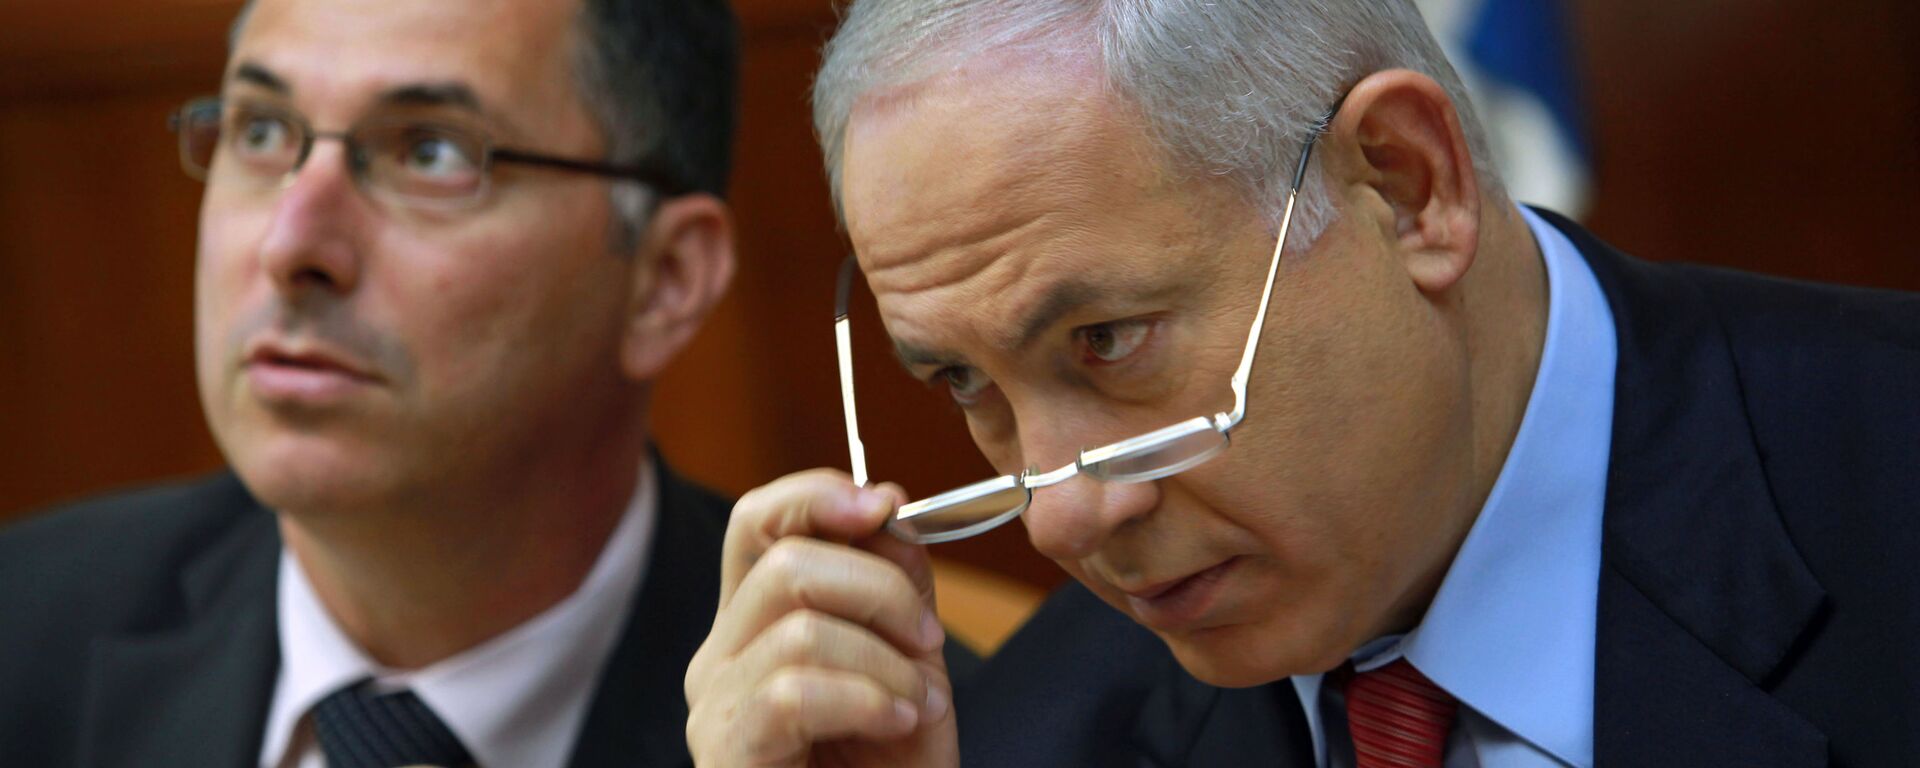 Israeli Prime Minister Benjamin Netanyahu, right, and Education Minister Gideon Saar, attend the weekly cabinet meeting in Jerusalem, Sunday, Oct. 18, 2009. - Sputnik International, 1920, 18.01.2021